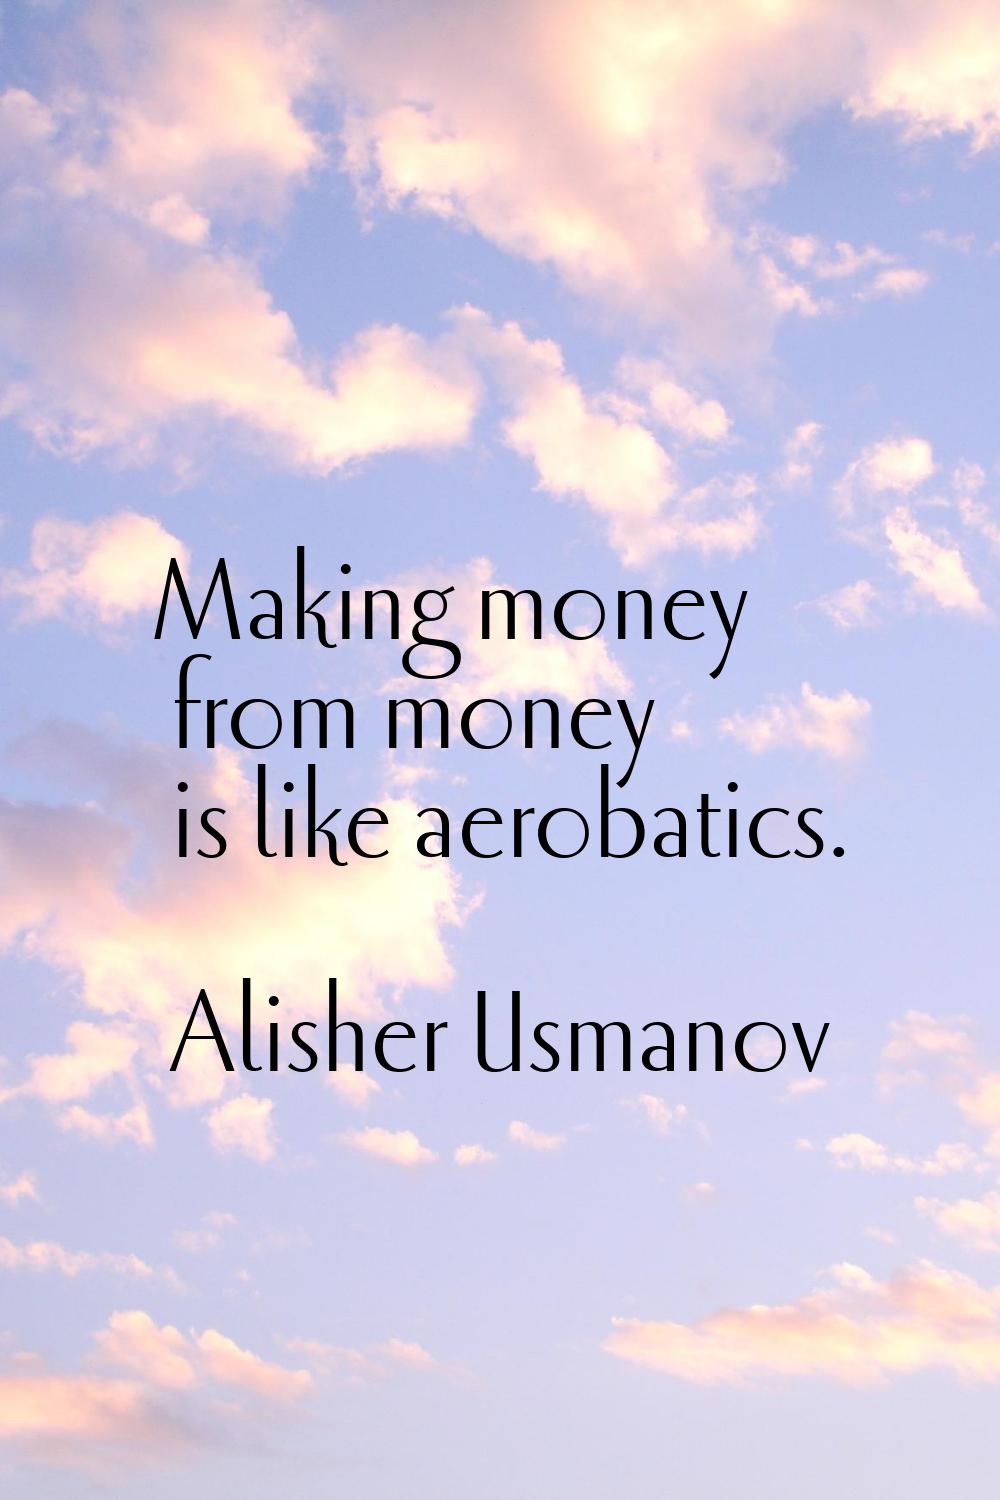 Making money from money is like aerobatics.